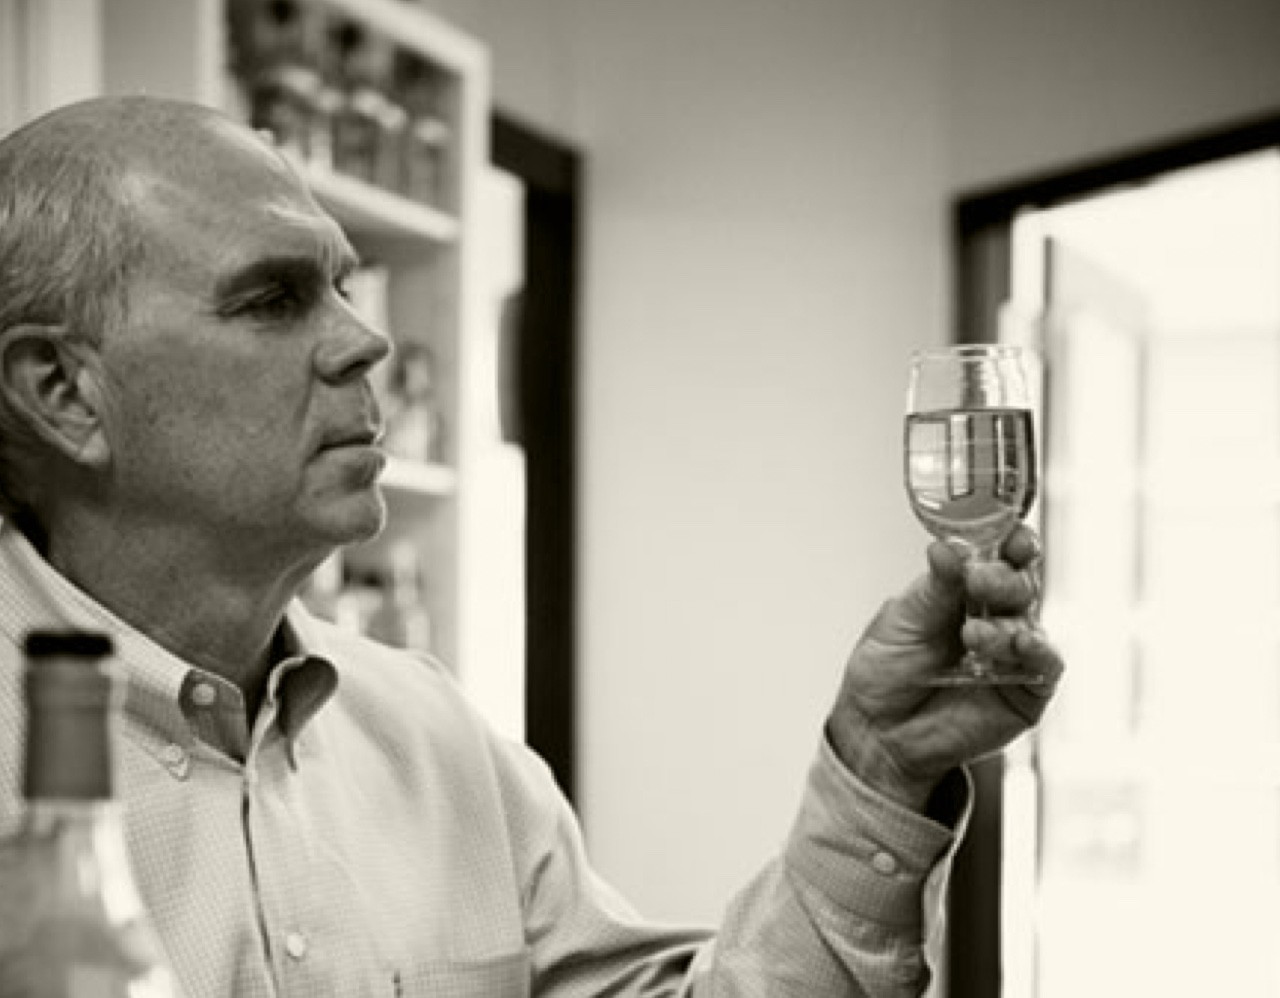 A man taste testing a glass of Van Winkle Bourbon